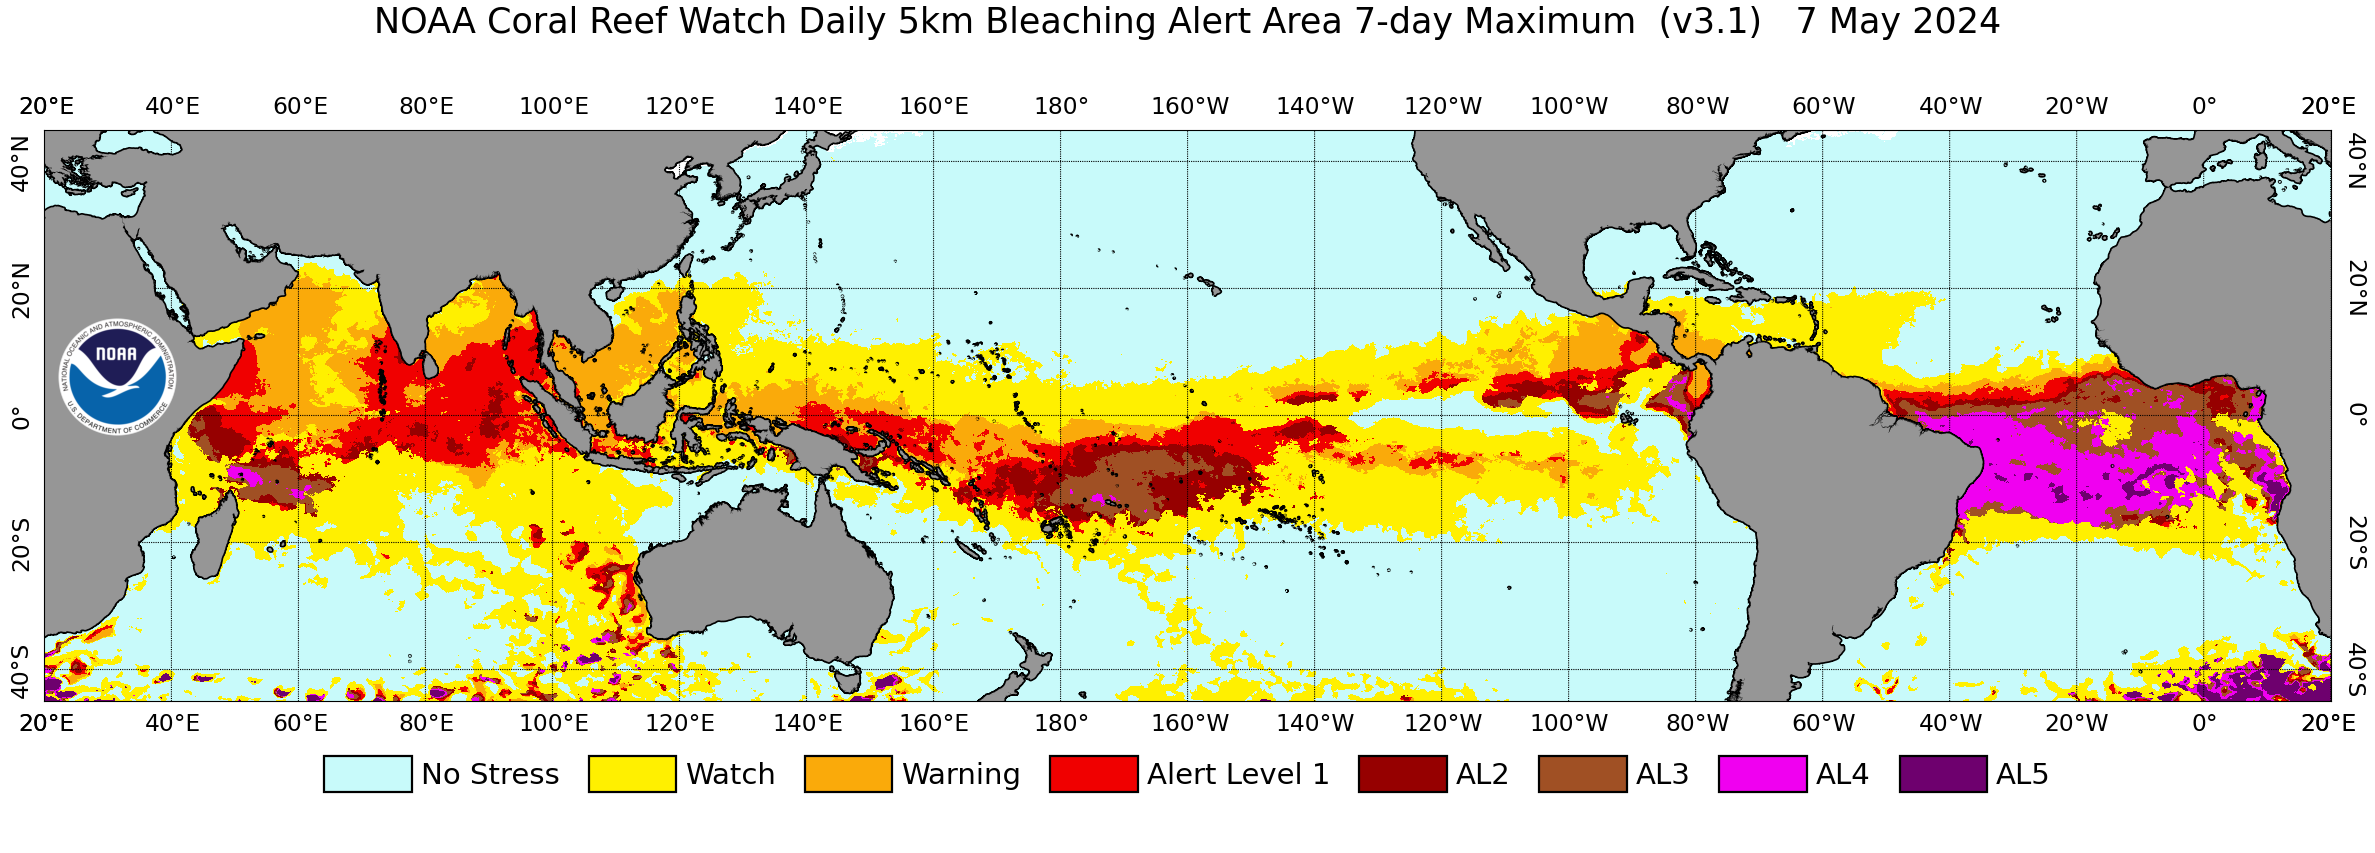 Global Coral Bleaching Heat Stress Alert Area 7-Day Maximum image